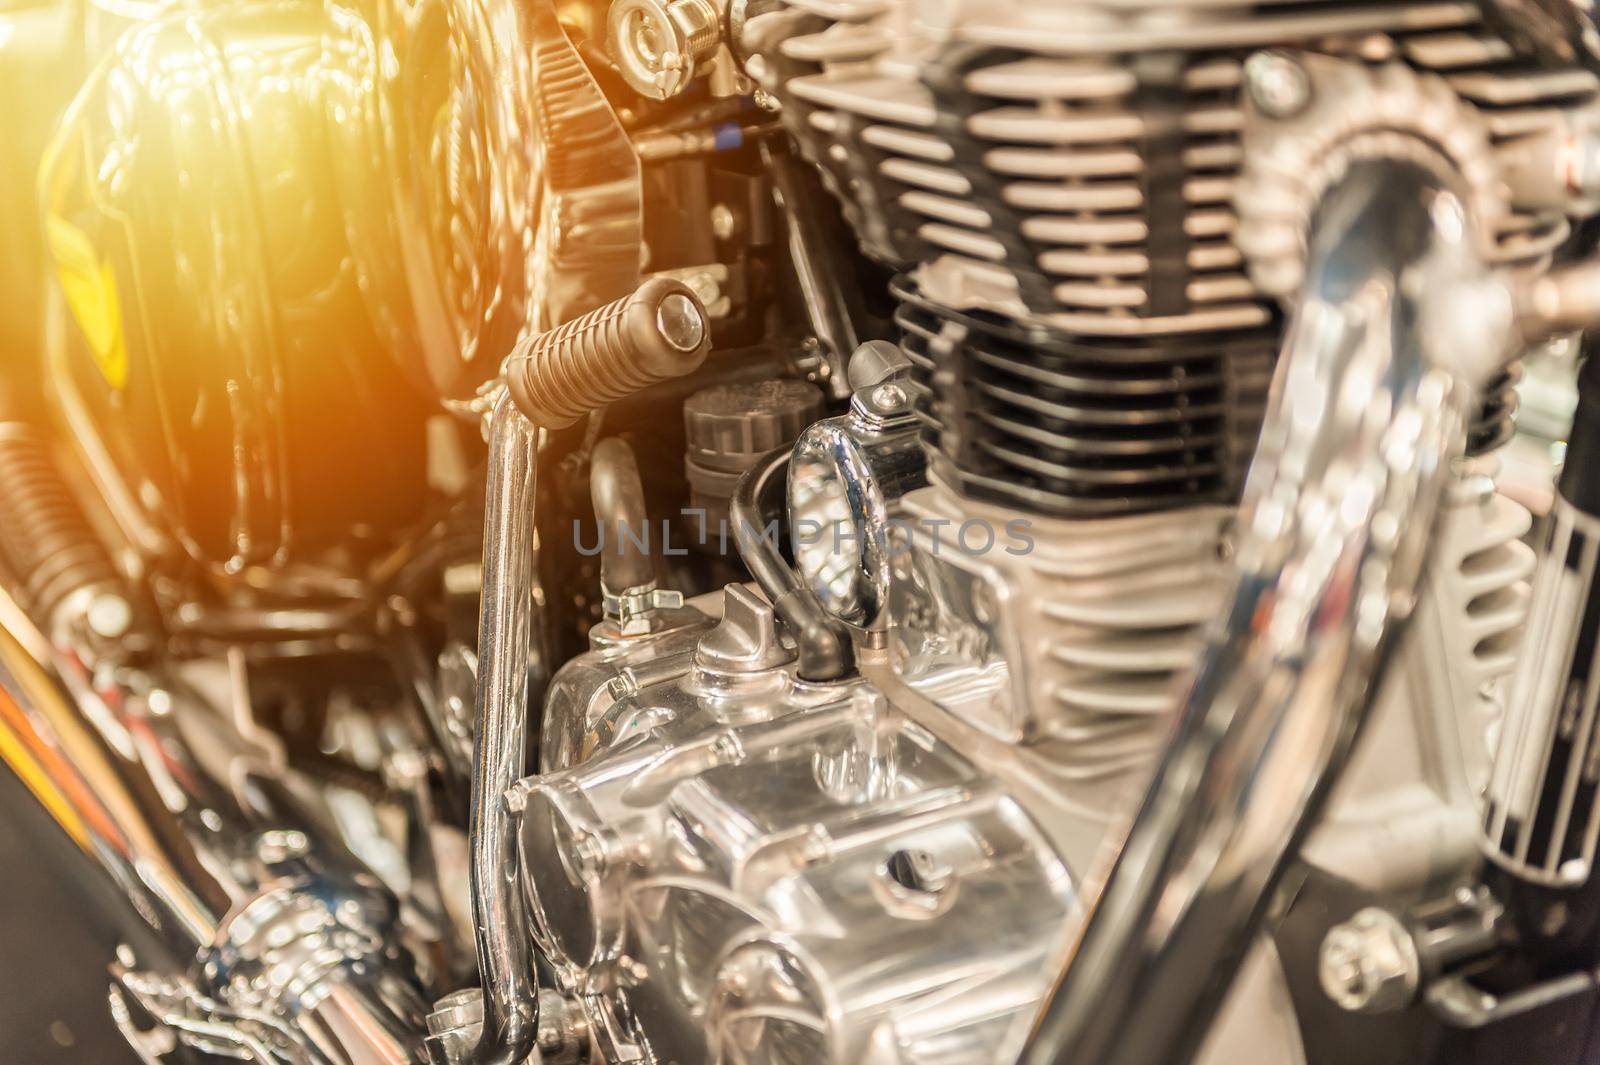 Engine of a powerful motorbike by cla78